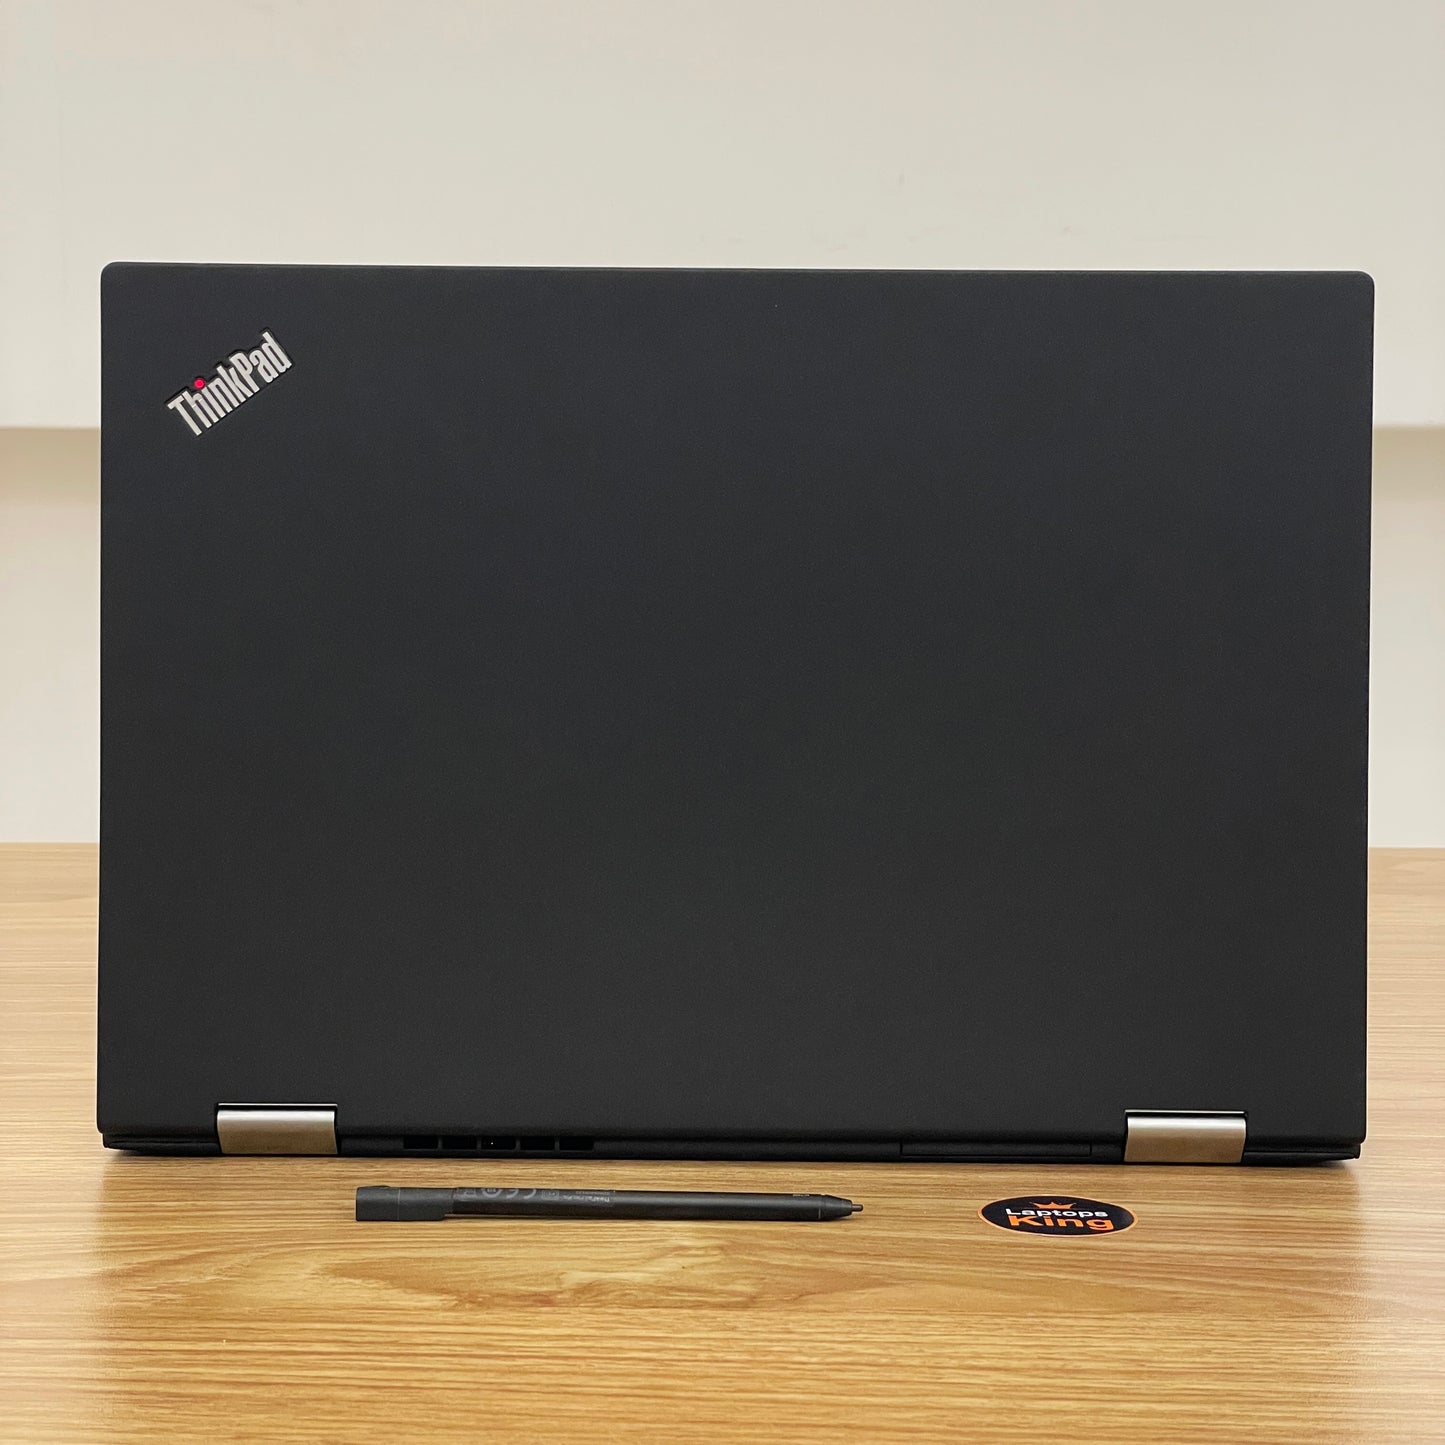 Lenovo ThinkPad X1 Yoga i7 2in1 Laptop (Open Box)